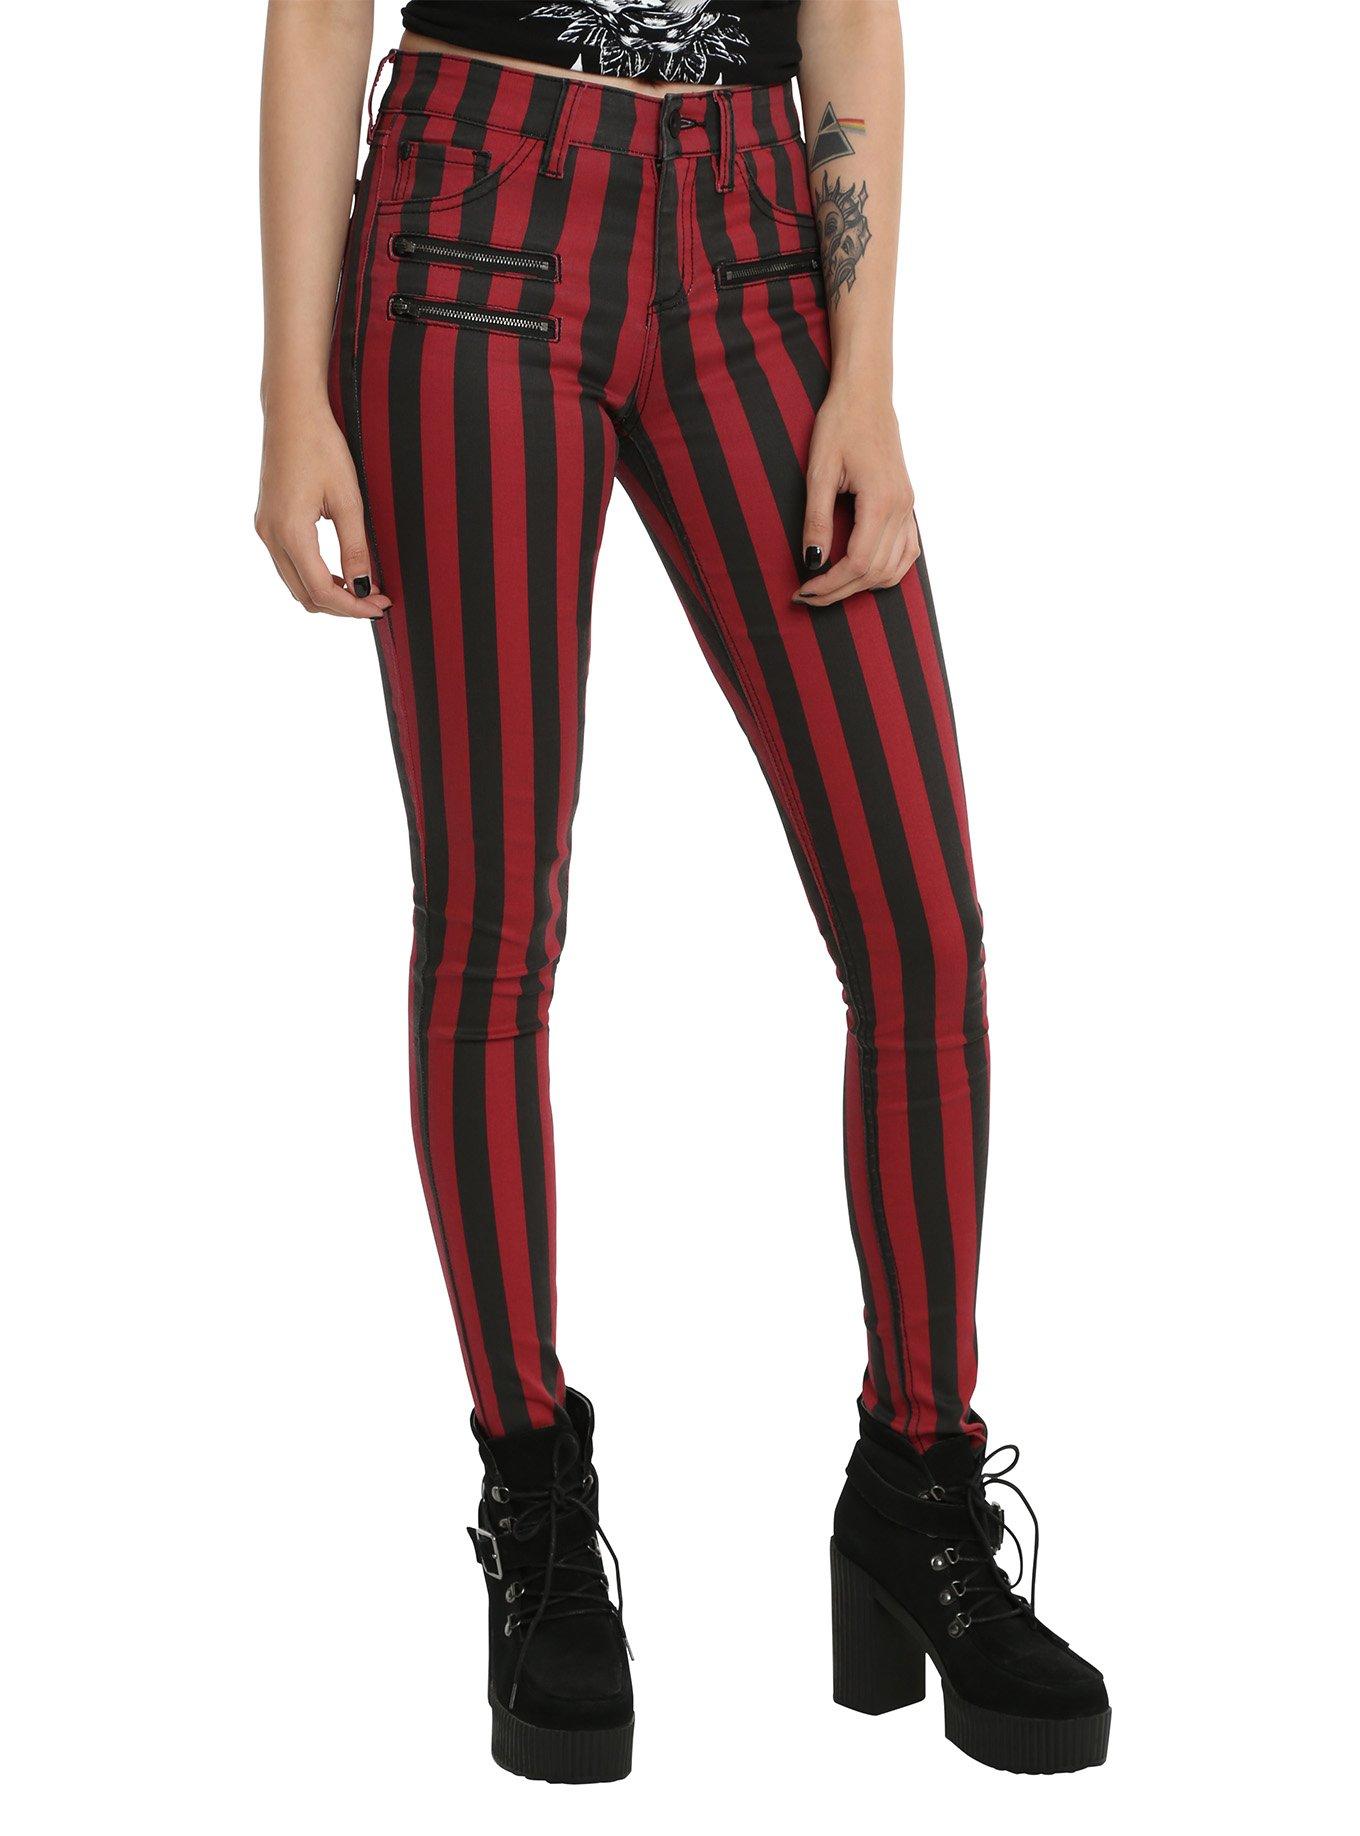 Blackheart & Red Stripe Zipper Stingerette Jeans | Hot Topic